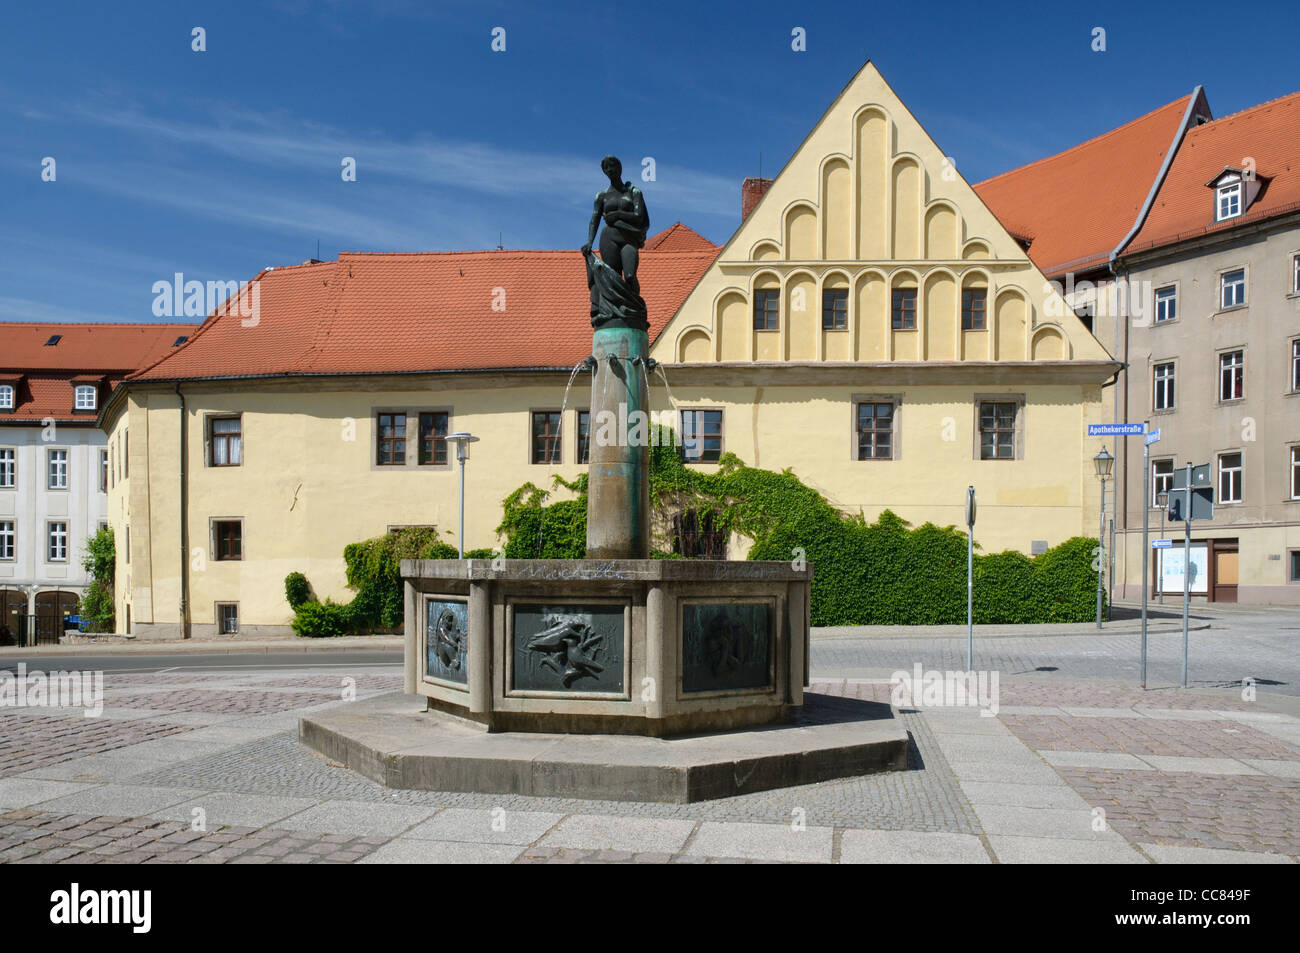 Fountain in front of Domapotheke pharmacy, Merseburg, Saxony-Anhalt, Germany, Europe Stock Photo